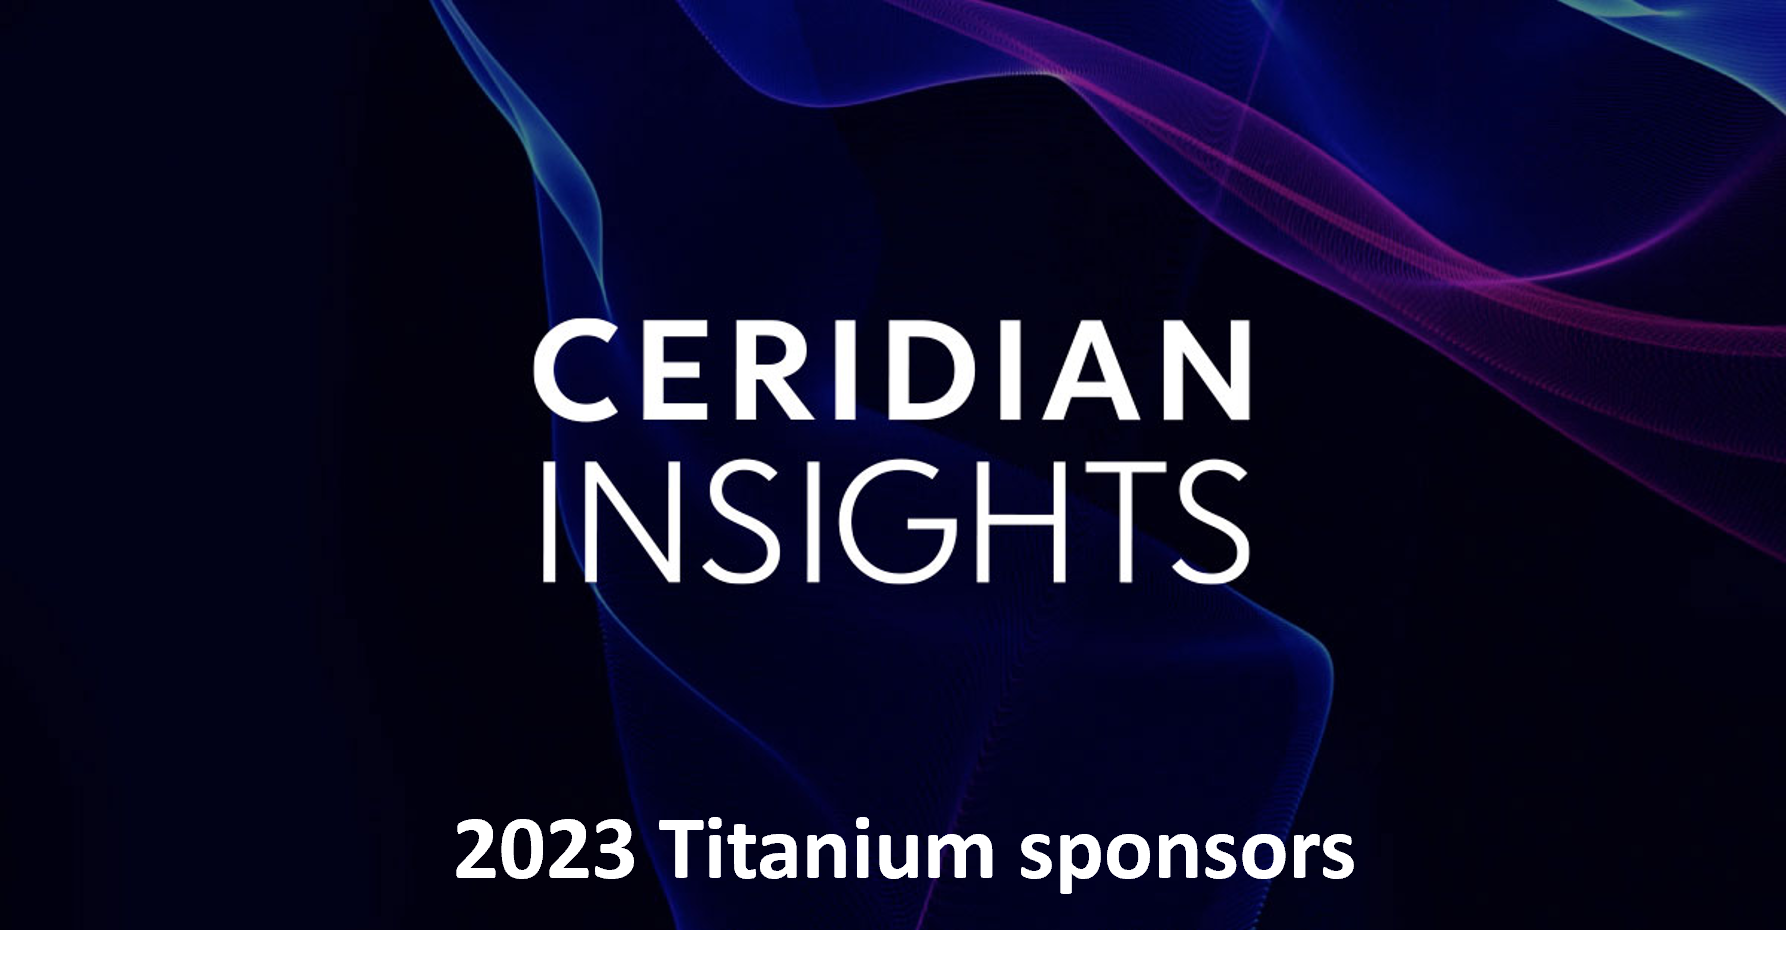 Ceridian INSIGHTS 2023